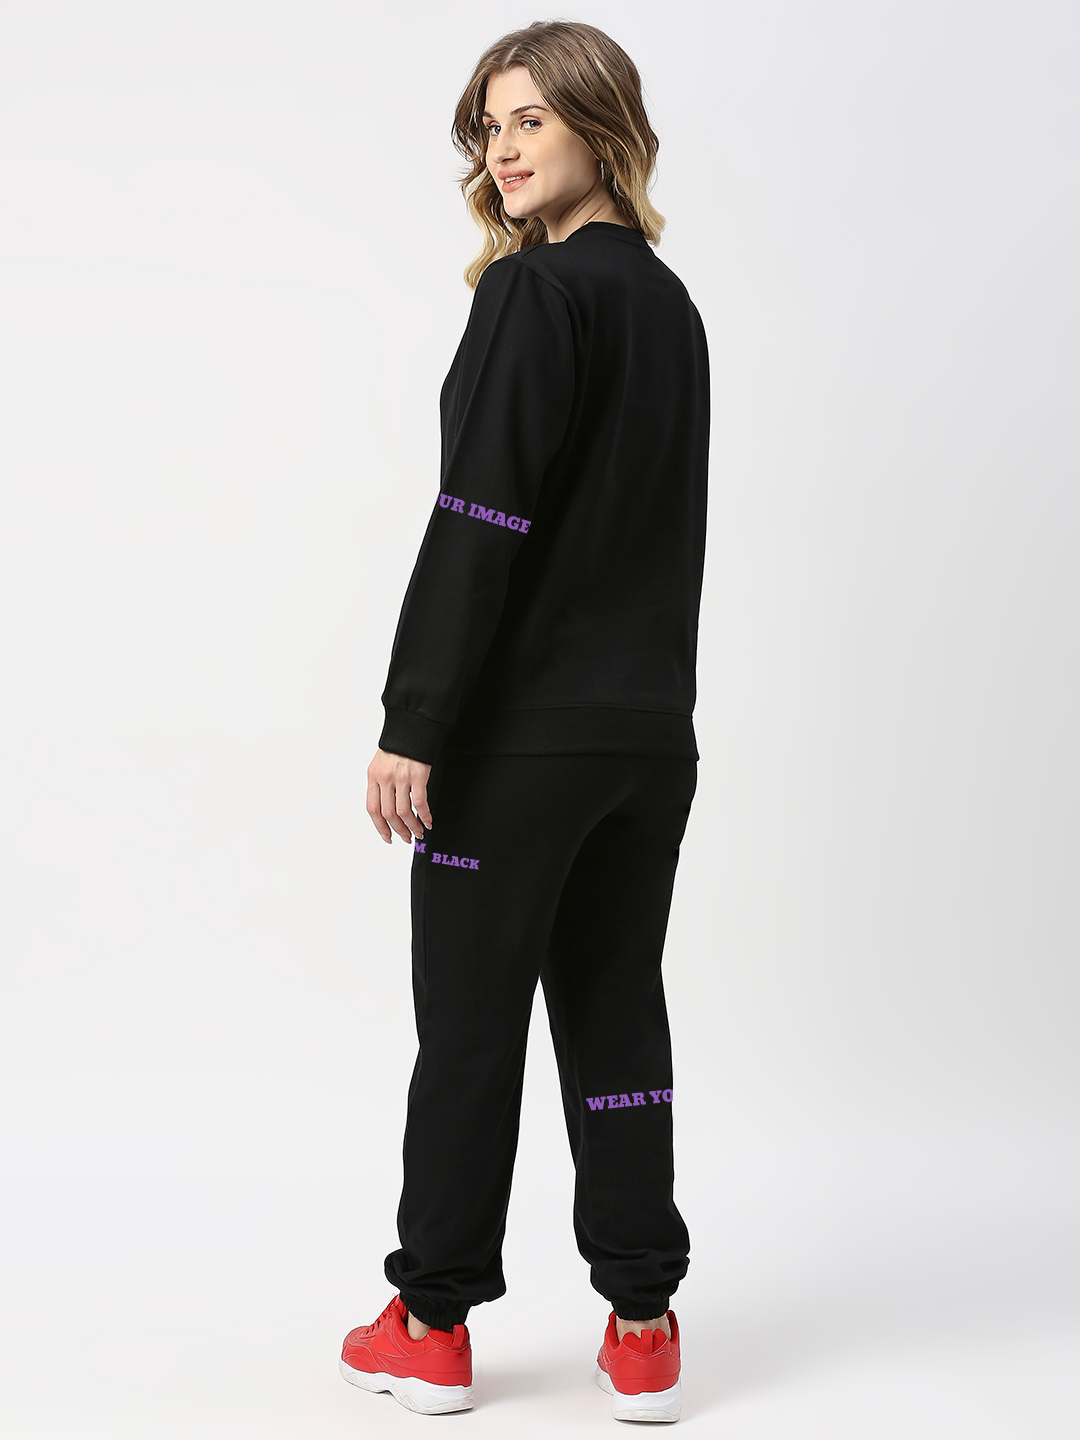 Buy Blamblack Black Sweatshirt and Joggers Co-ord Set